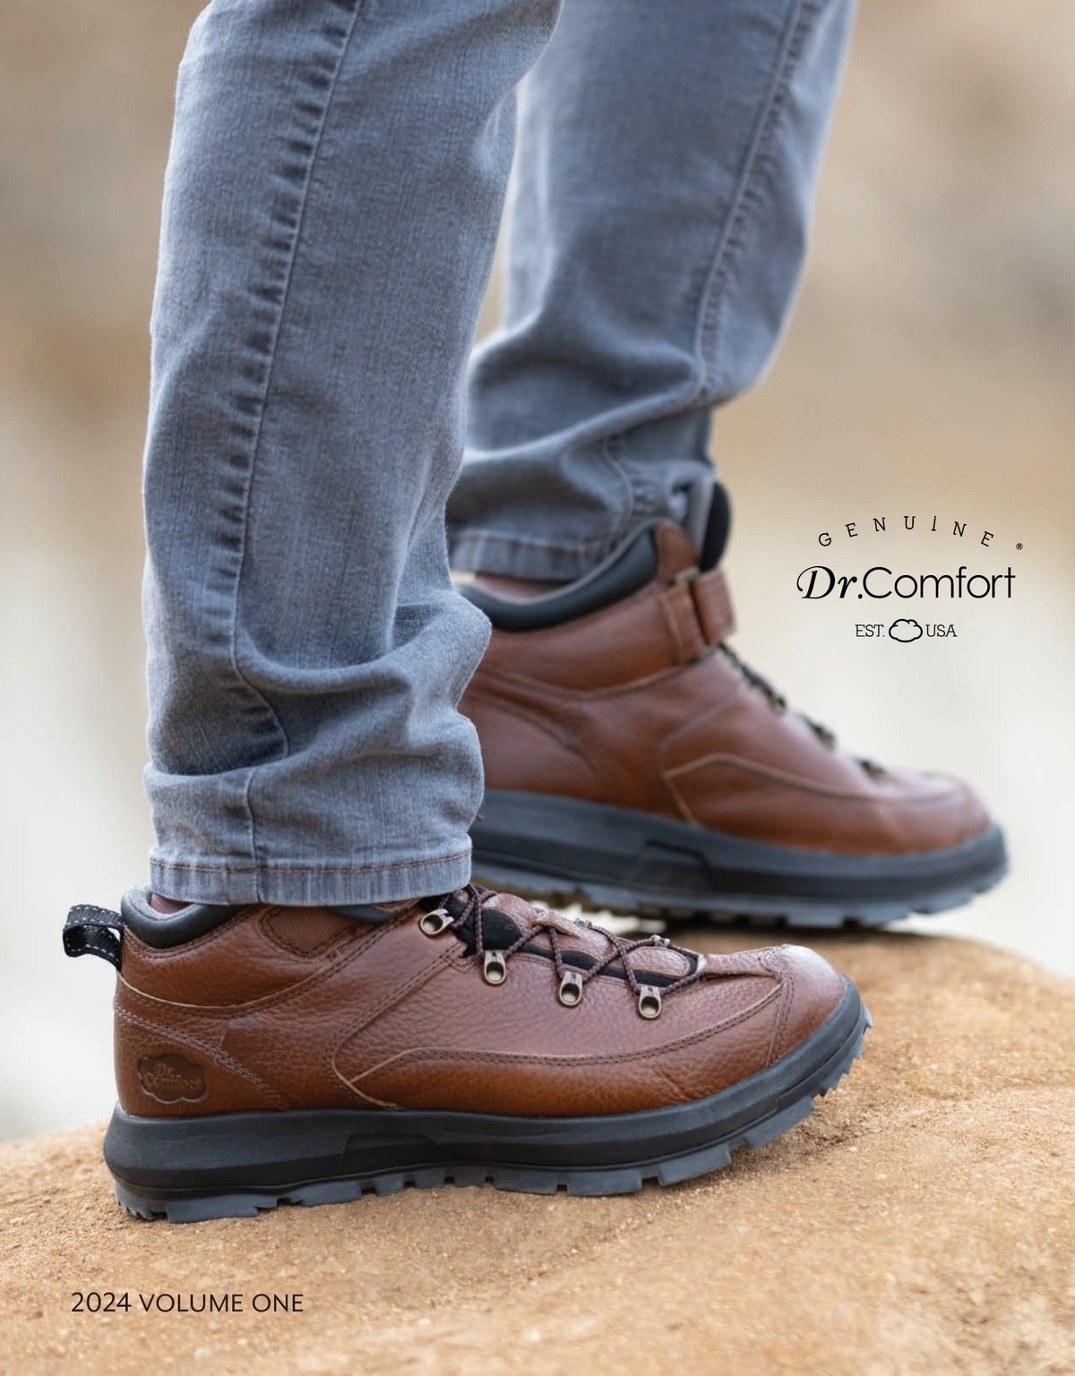 2023 Dr. Comfort Footwear Catalog Volume Three